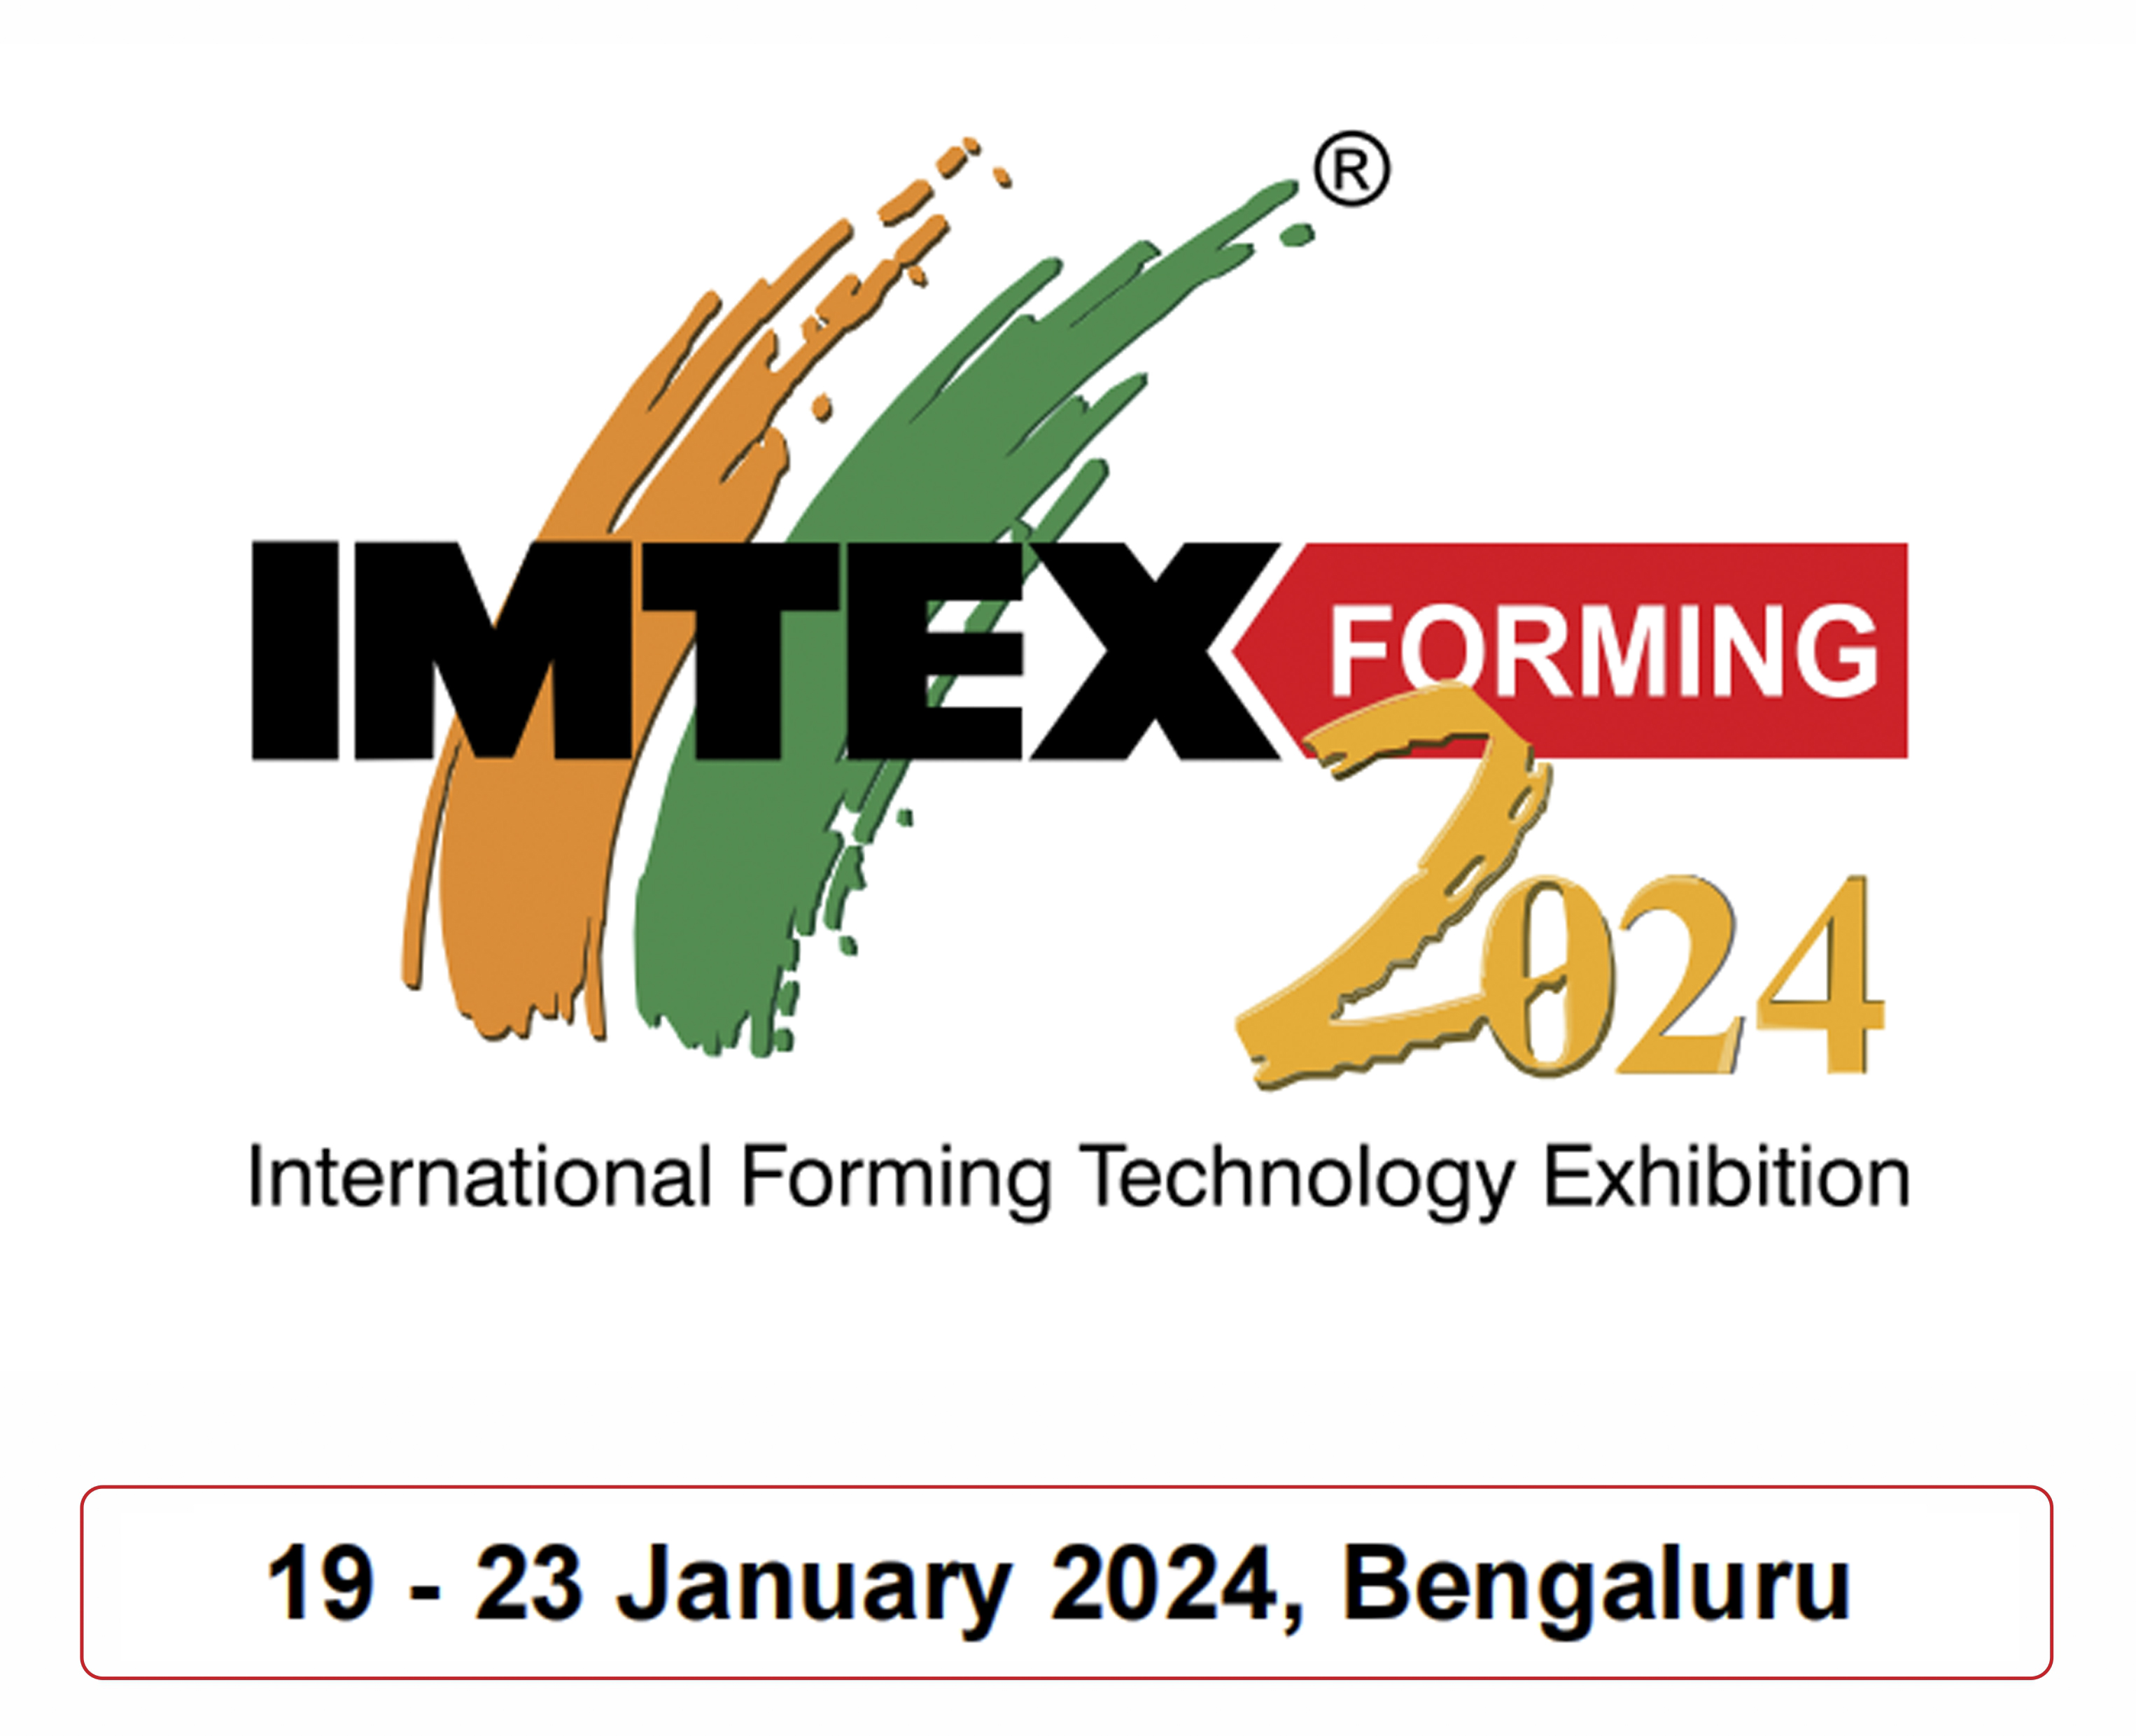 IMTEX International Machine Tool and Manufacturing Technology